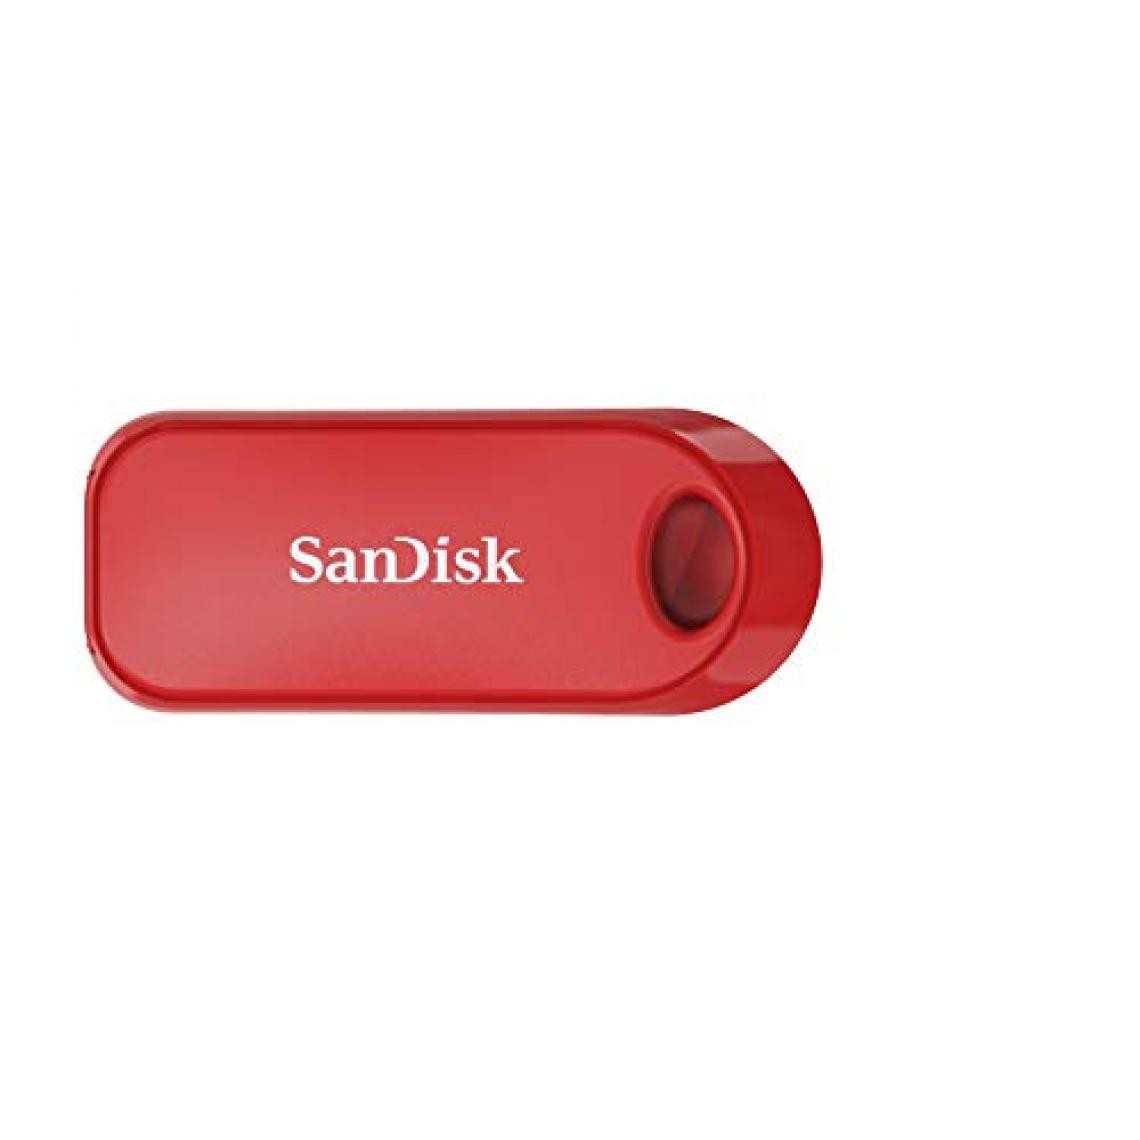 Sandisk - Cruzer Snap 2.0 BTS 2019 Red Global - Clés USB